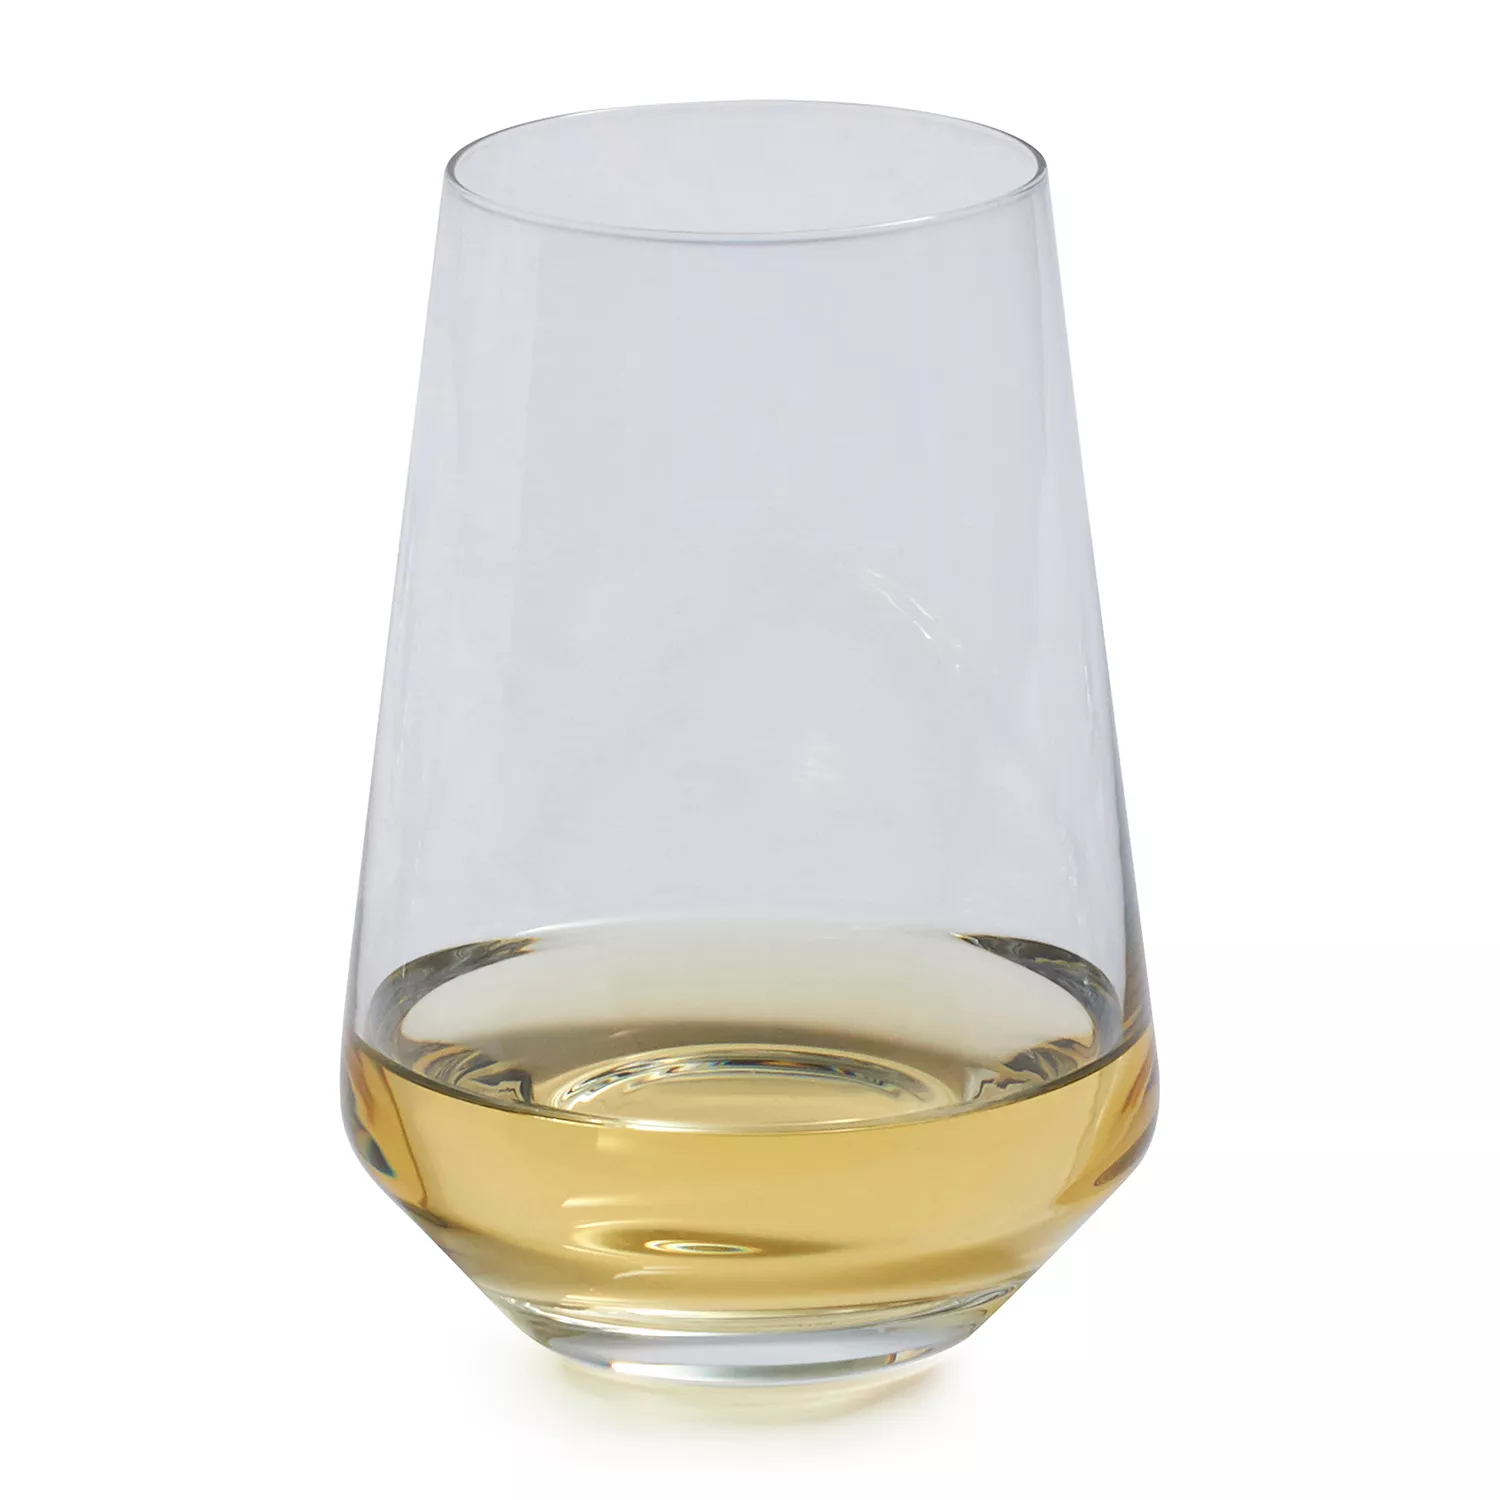 Schott Zwiesel Pure Stemless White Wine Glasses